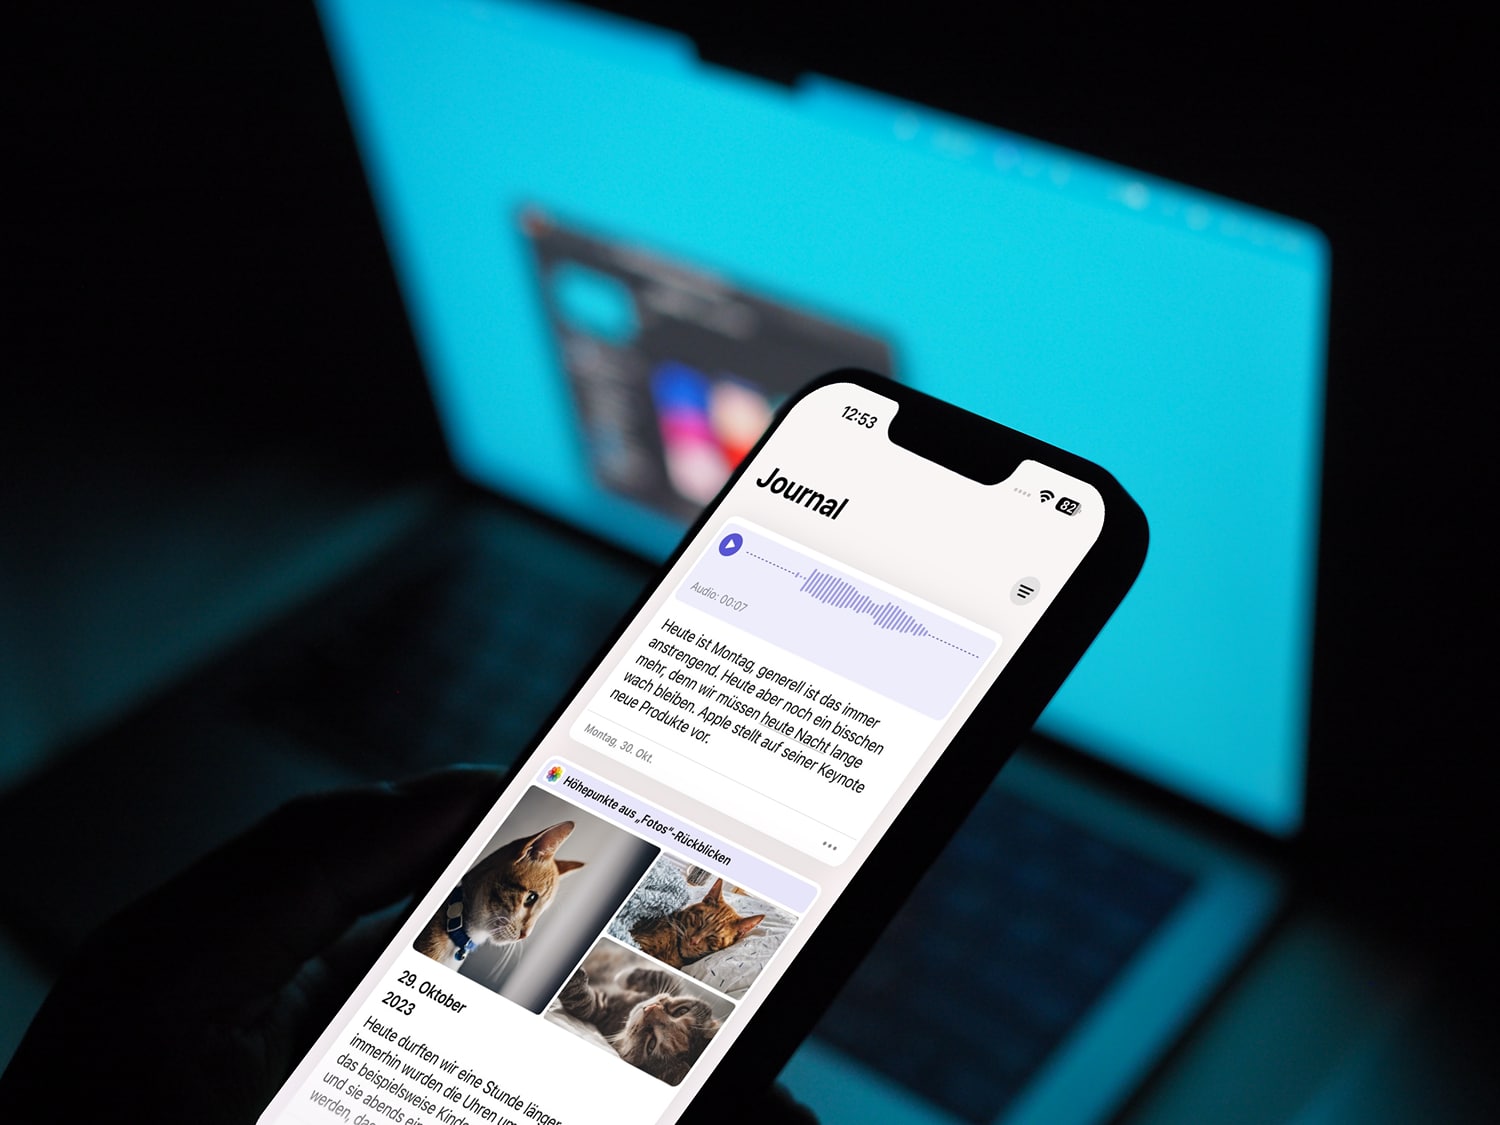 Apple's new Journal app on iPhone